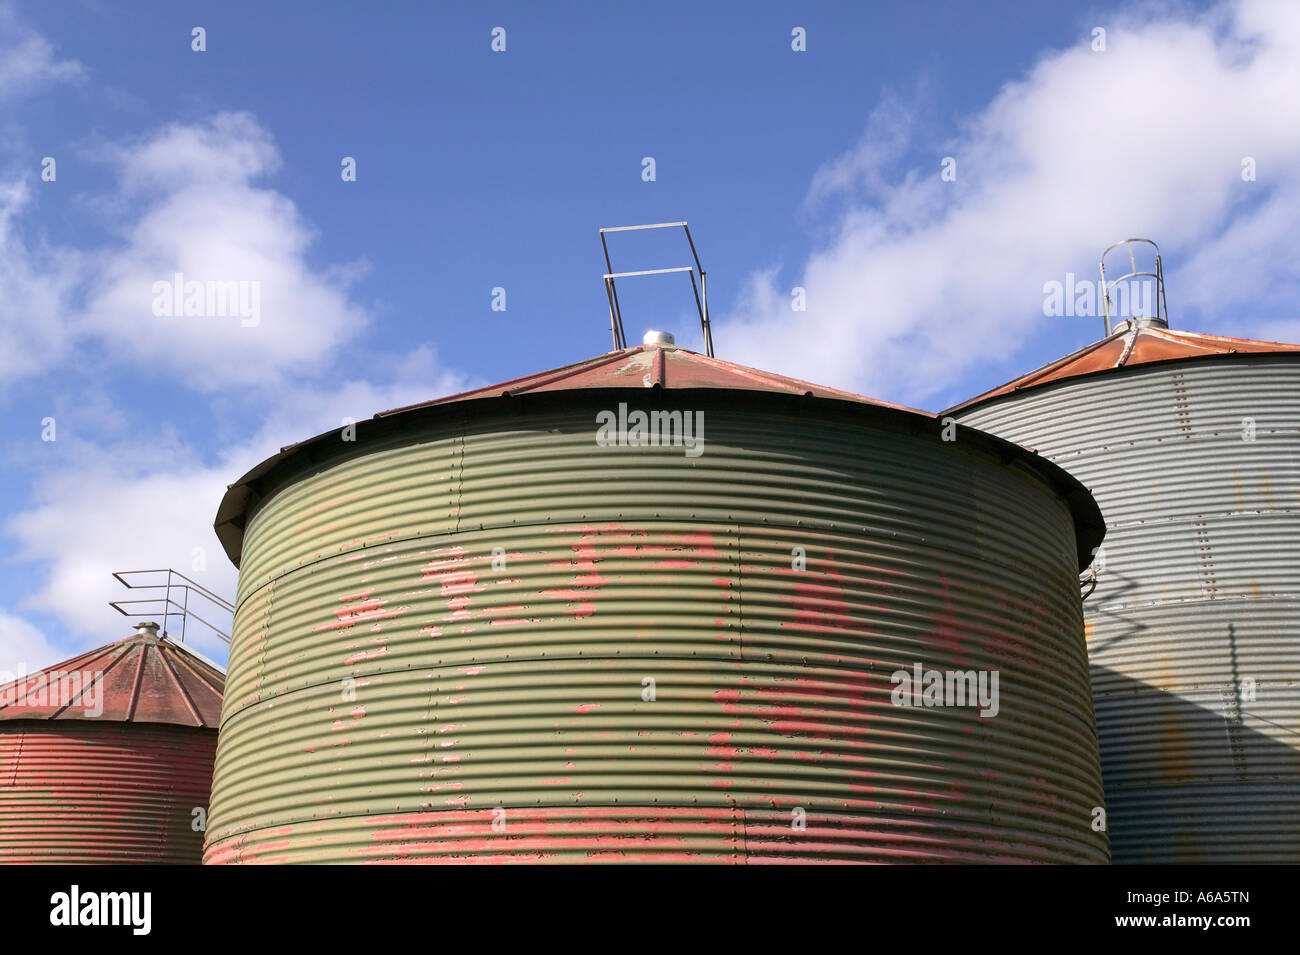 Grain drying silo against a blue sky Stock Photo